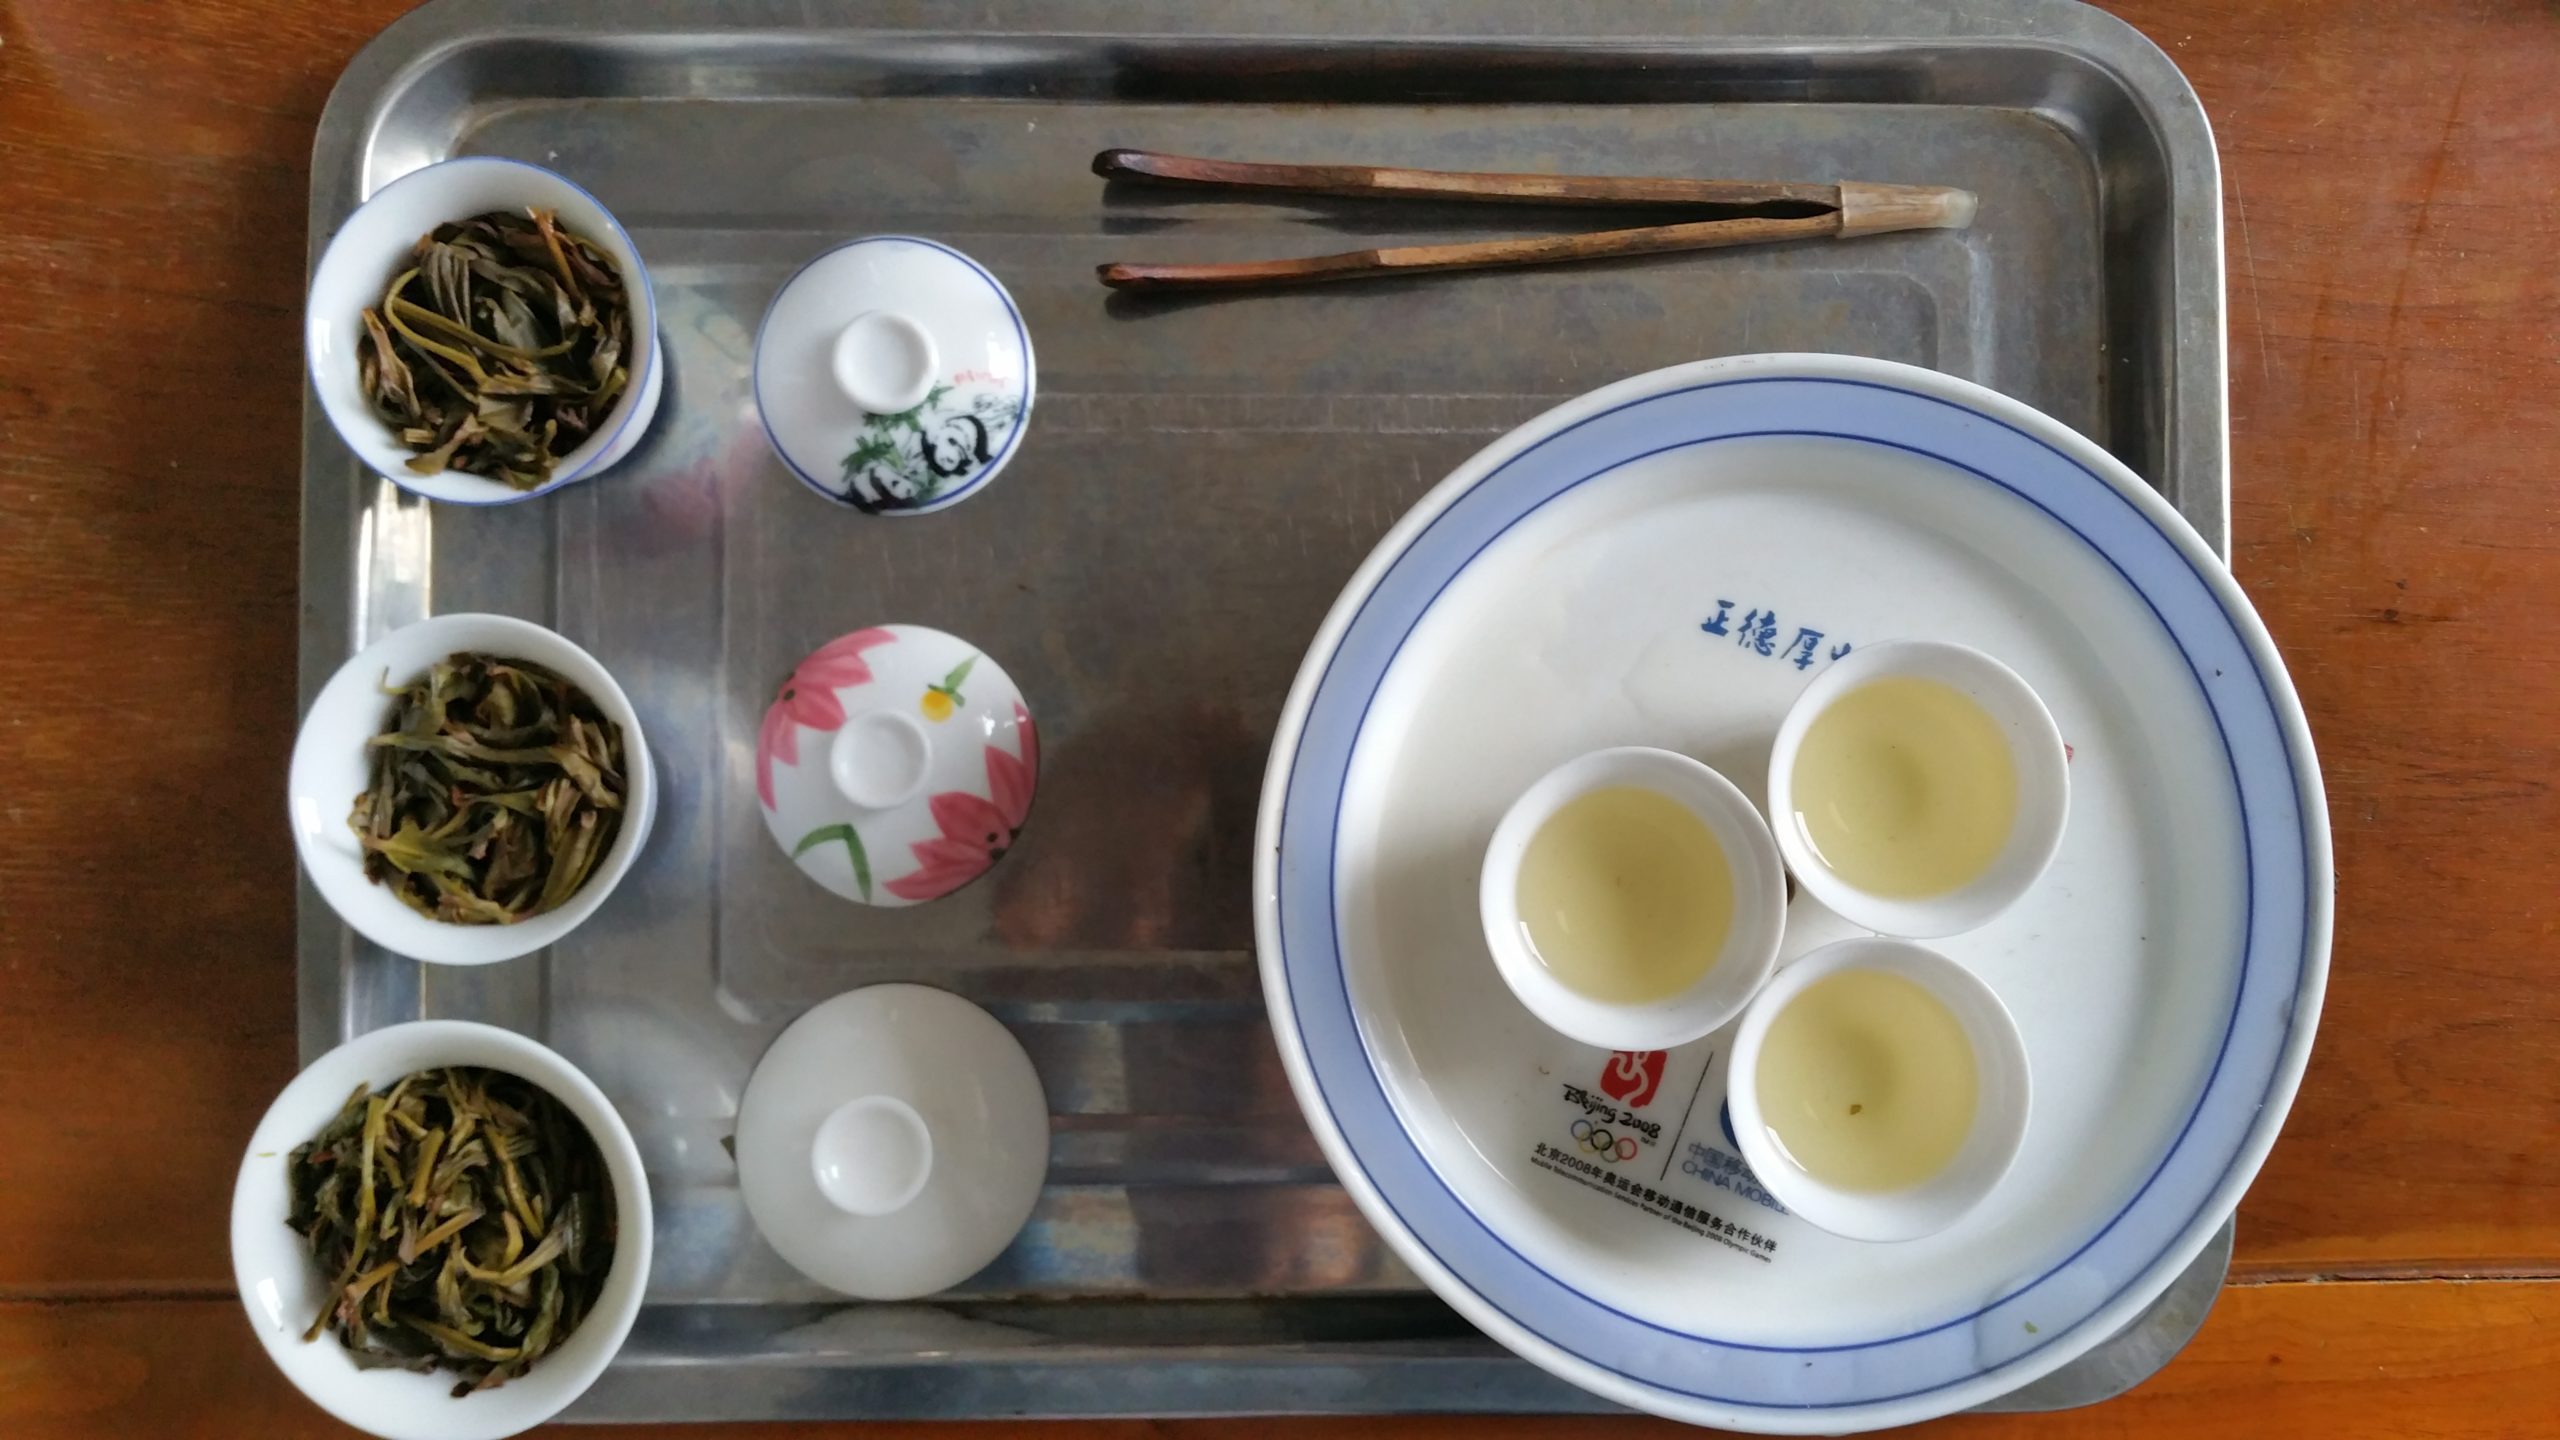 Chaouzhou style tea tasting